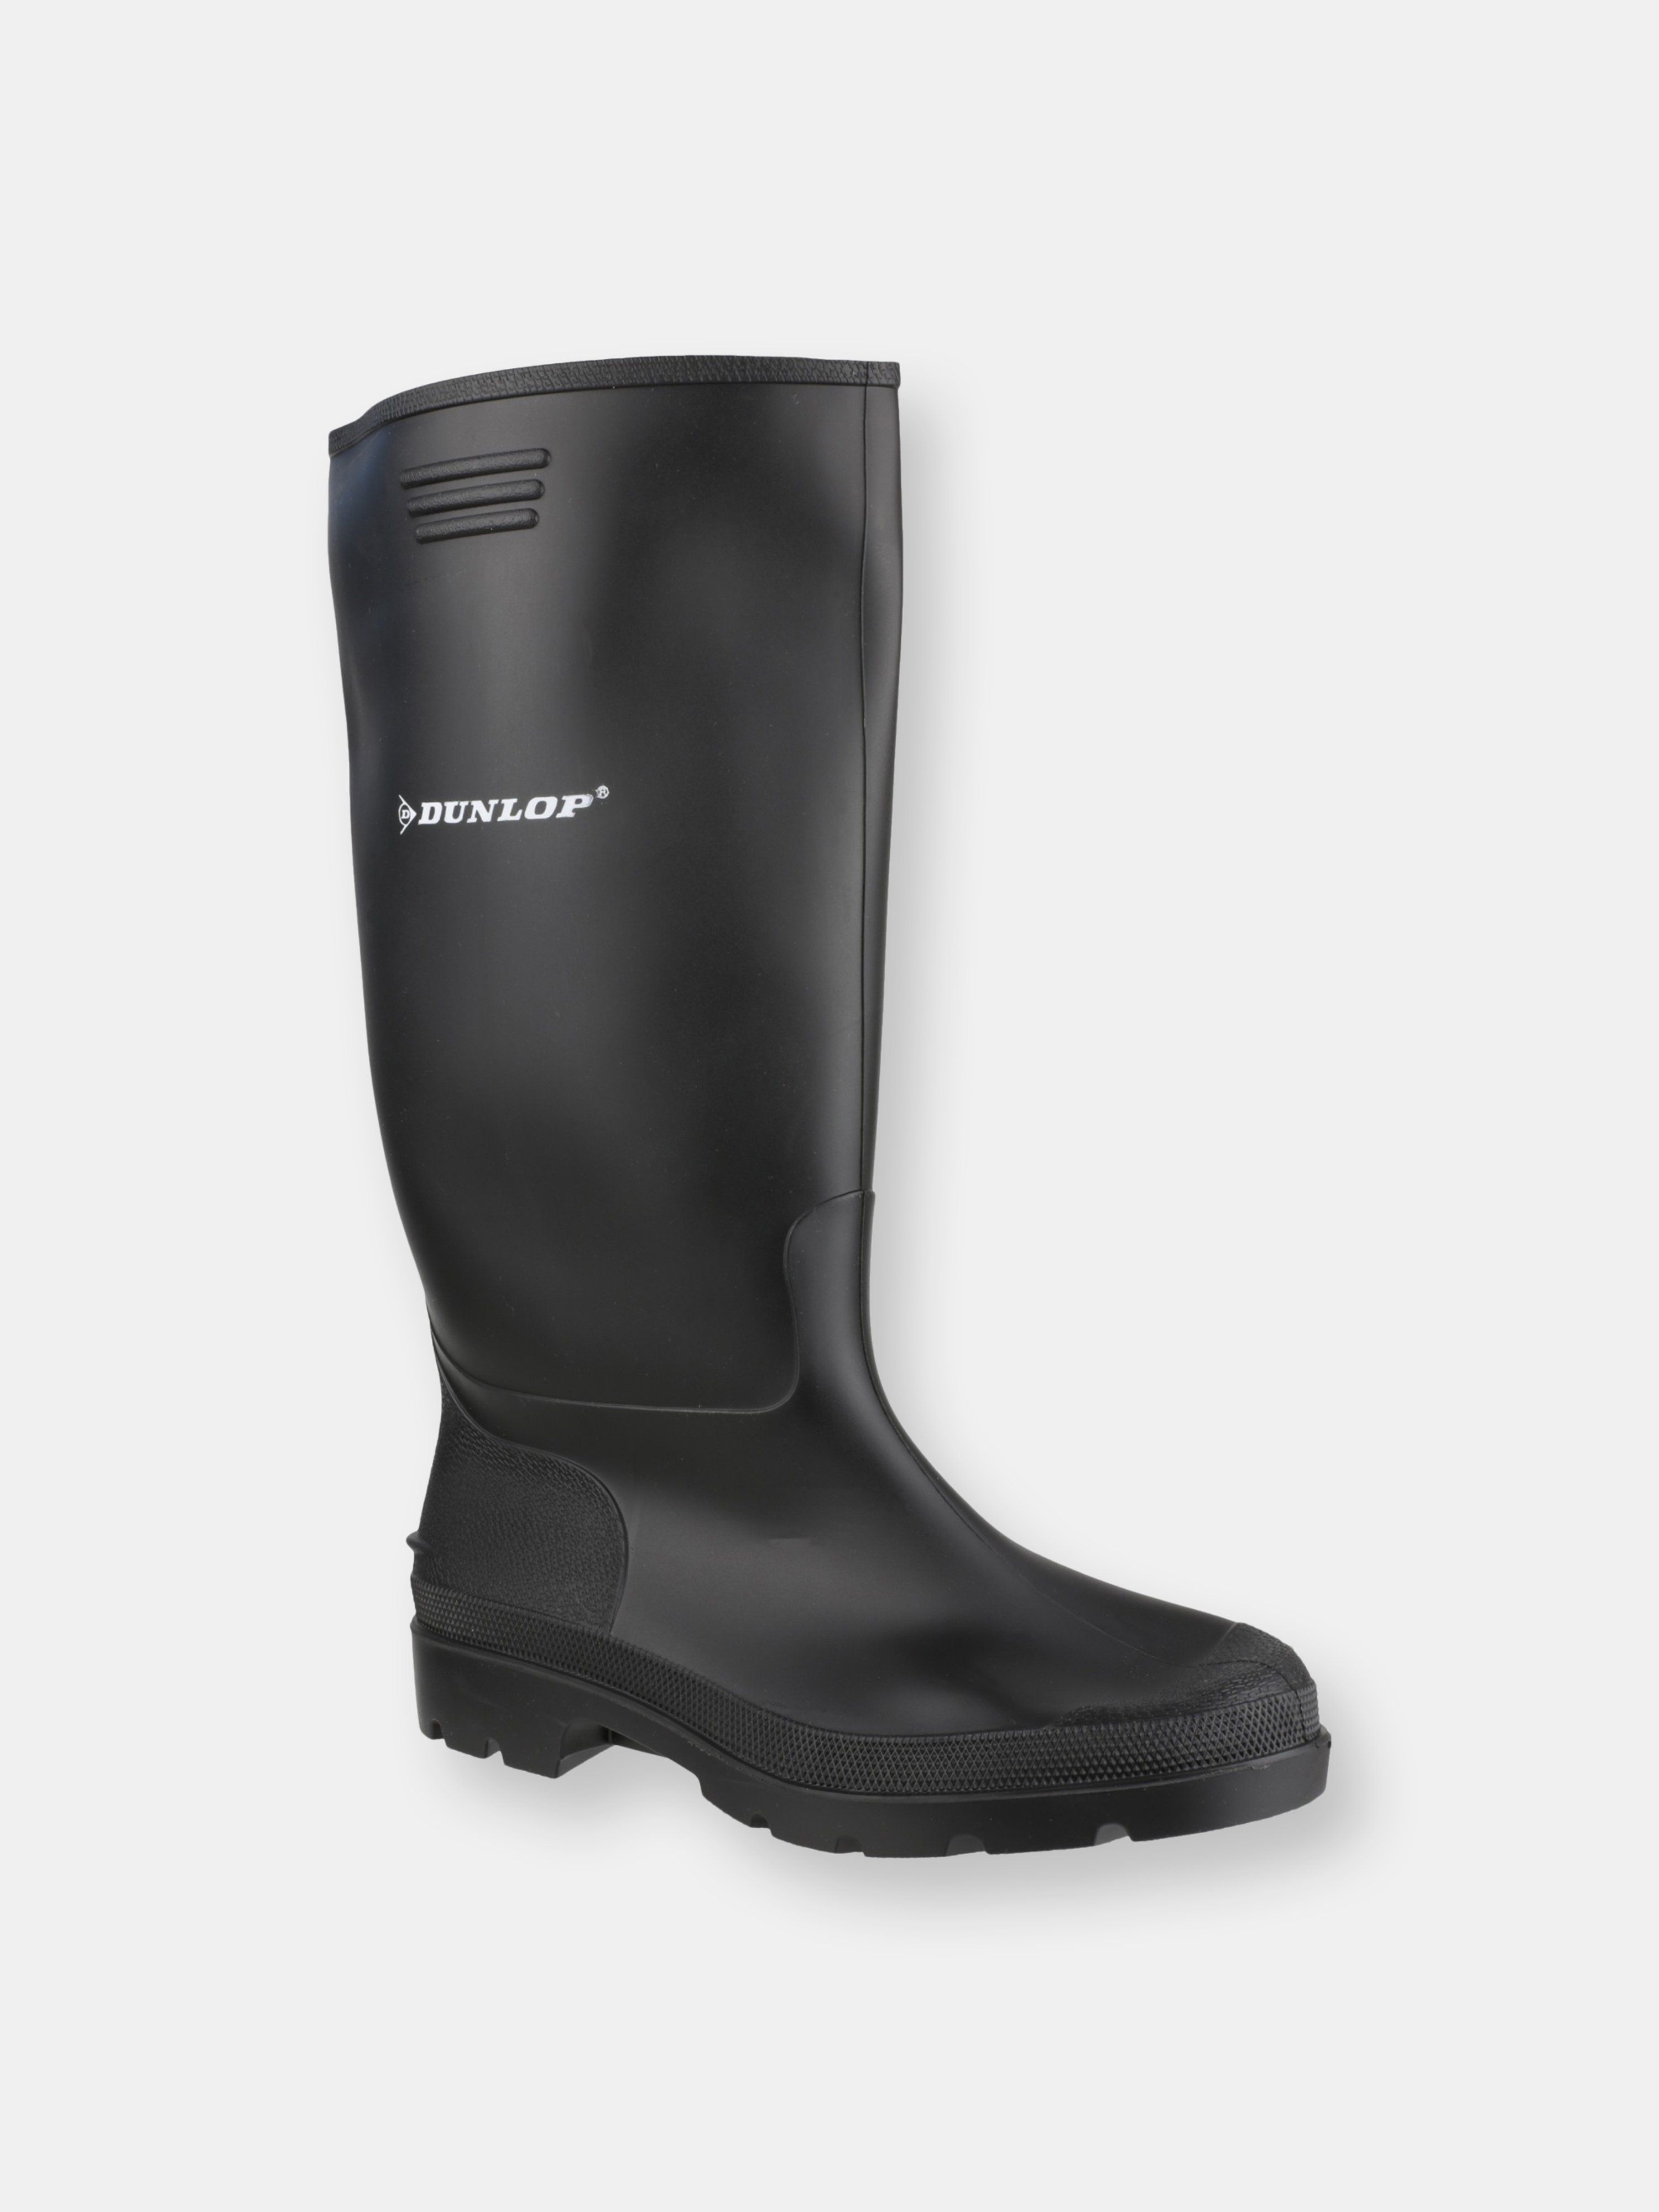 Dunlop 380pp Pricemaster Unisex Wellington Boots (Black) - 11 - Also in: 7.5, 6, 10, 9, 7, 8, 6.5, 5 | Verishop